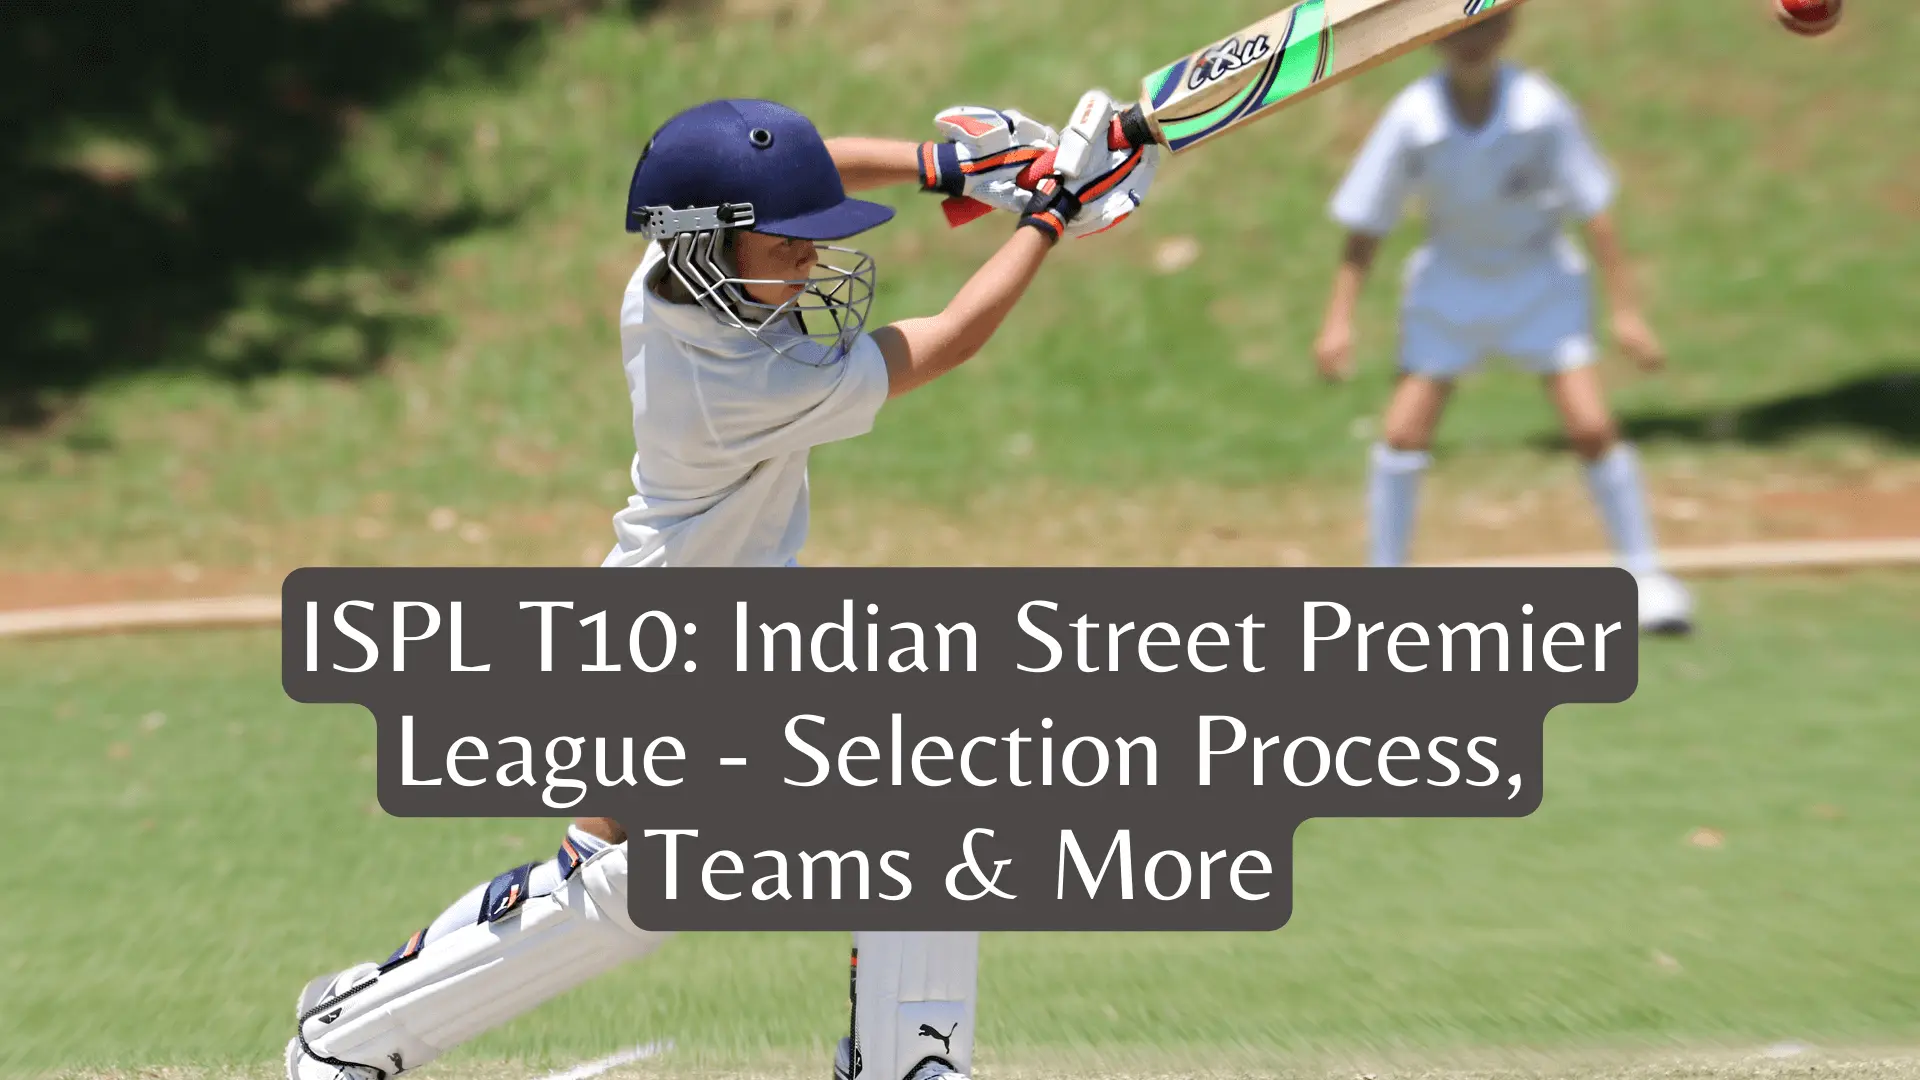 ISPL T10: Indian Street Premier League - Selection Process, Teams & More Details